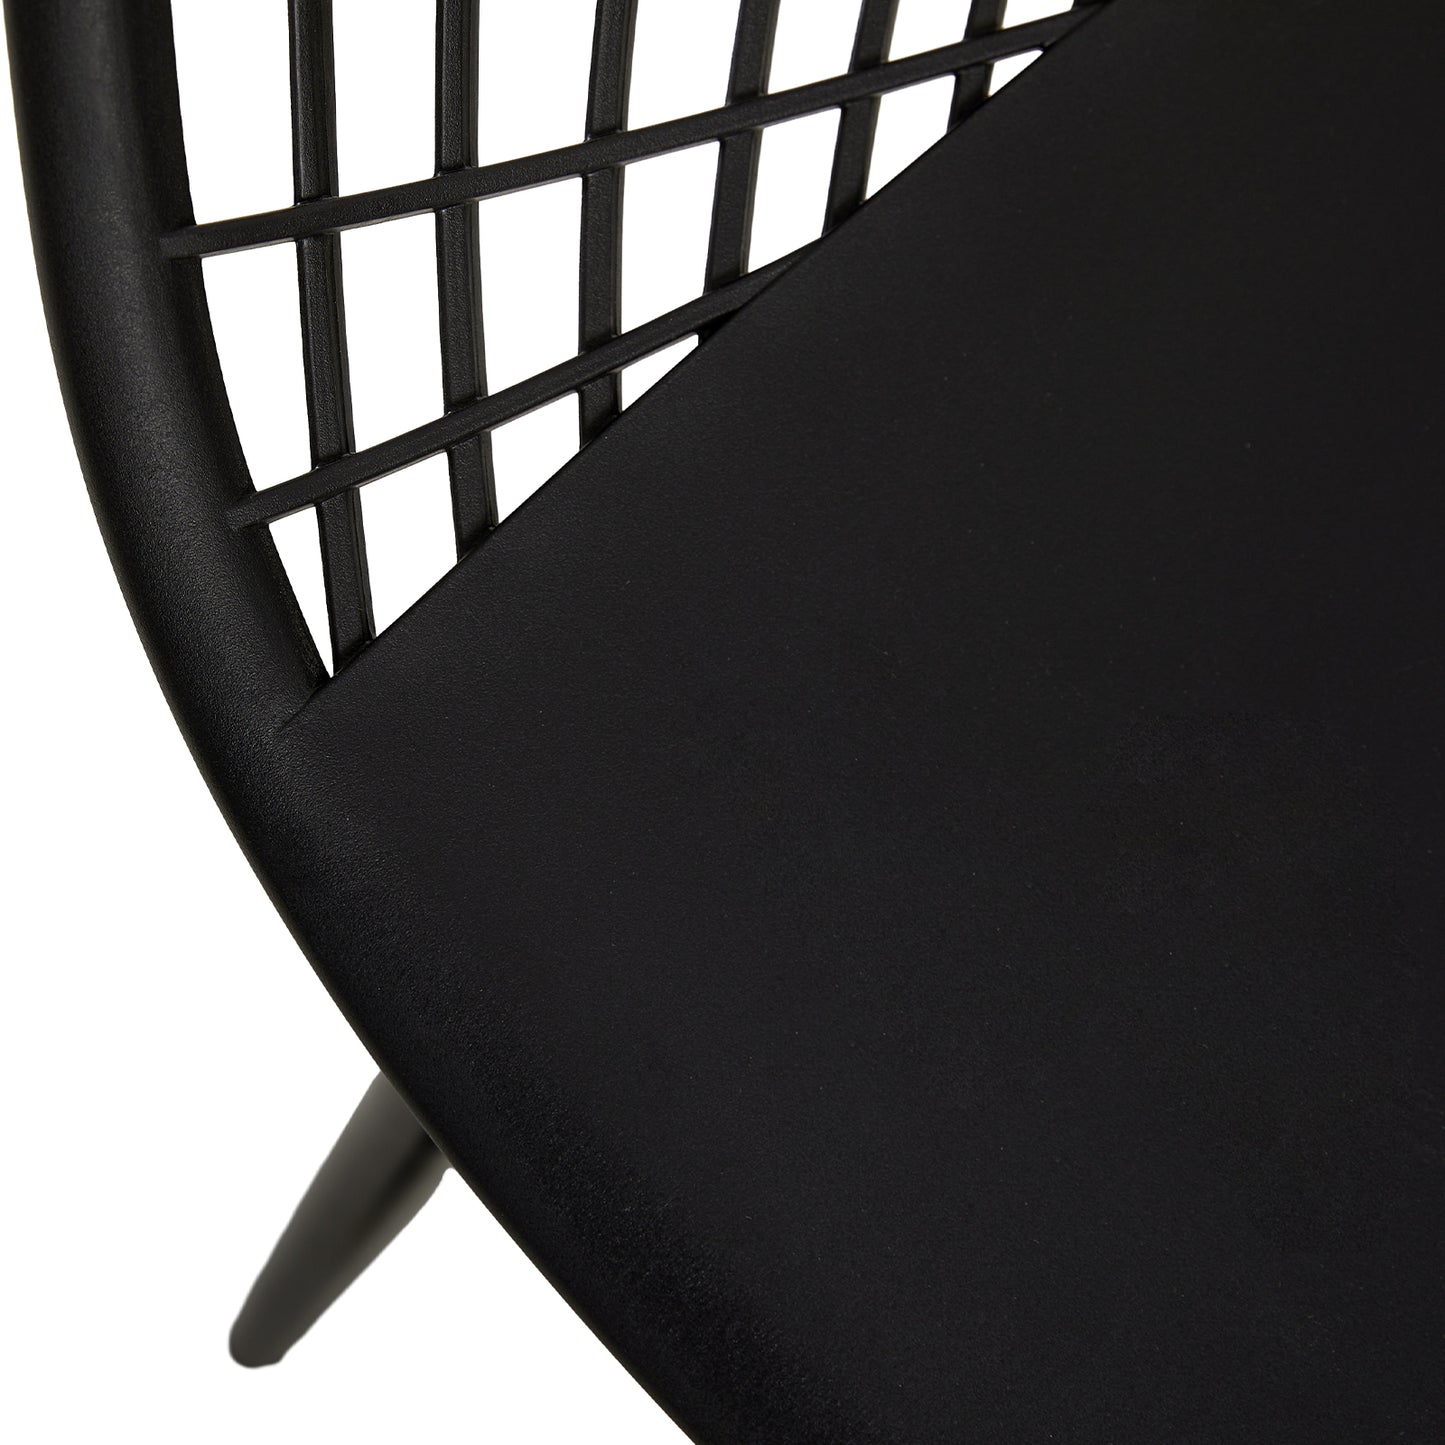 VERLOT Hollow Chair with Iron Legs - Black